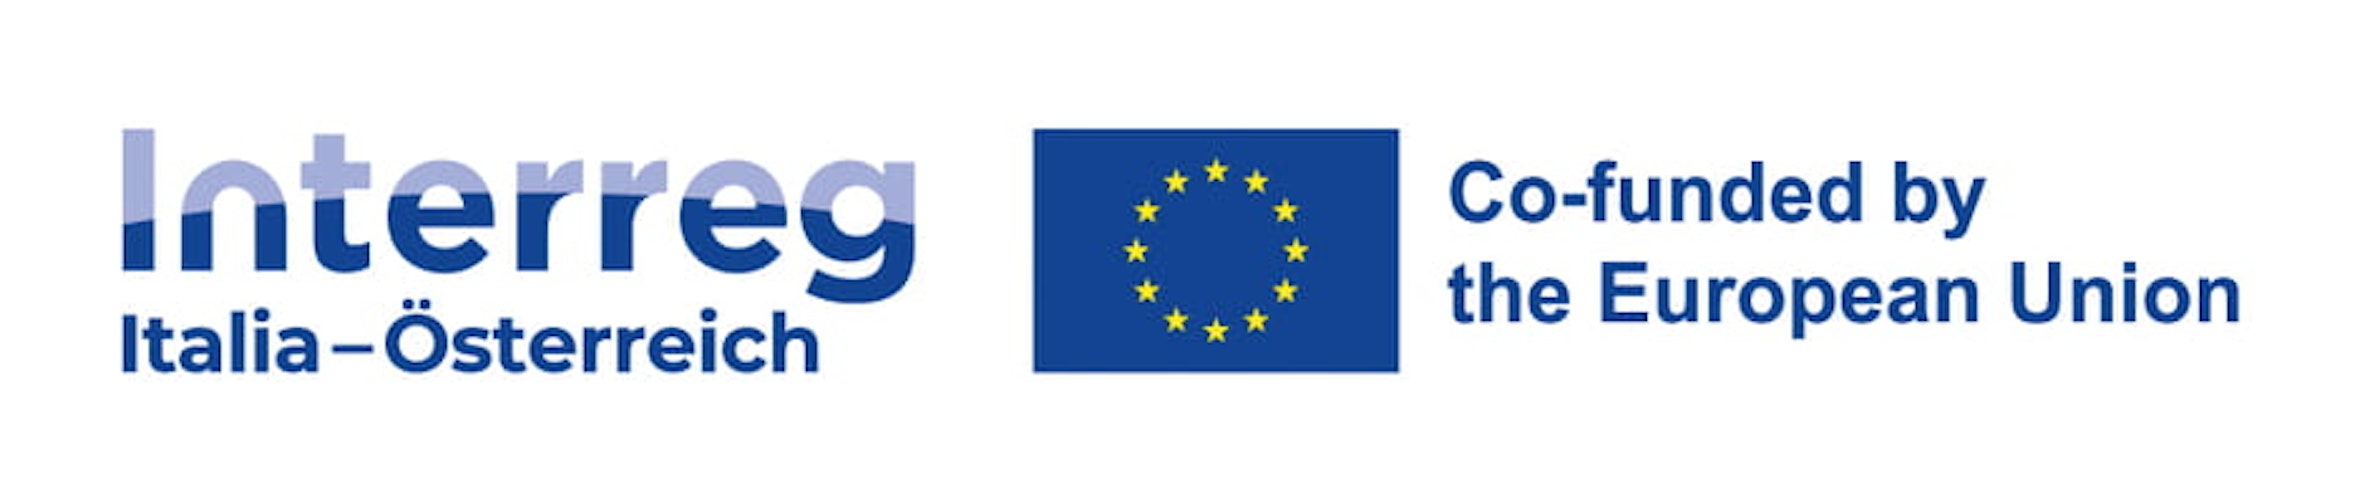 Interreg Italia Oesterreich European Union